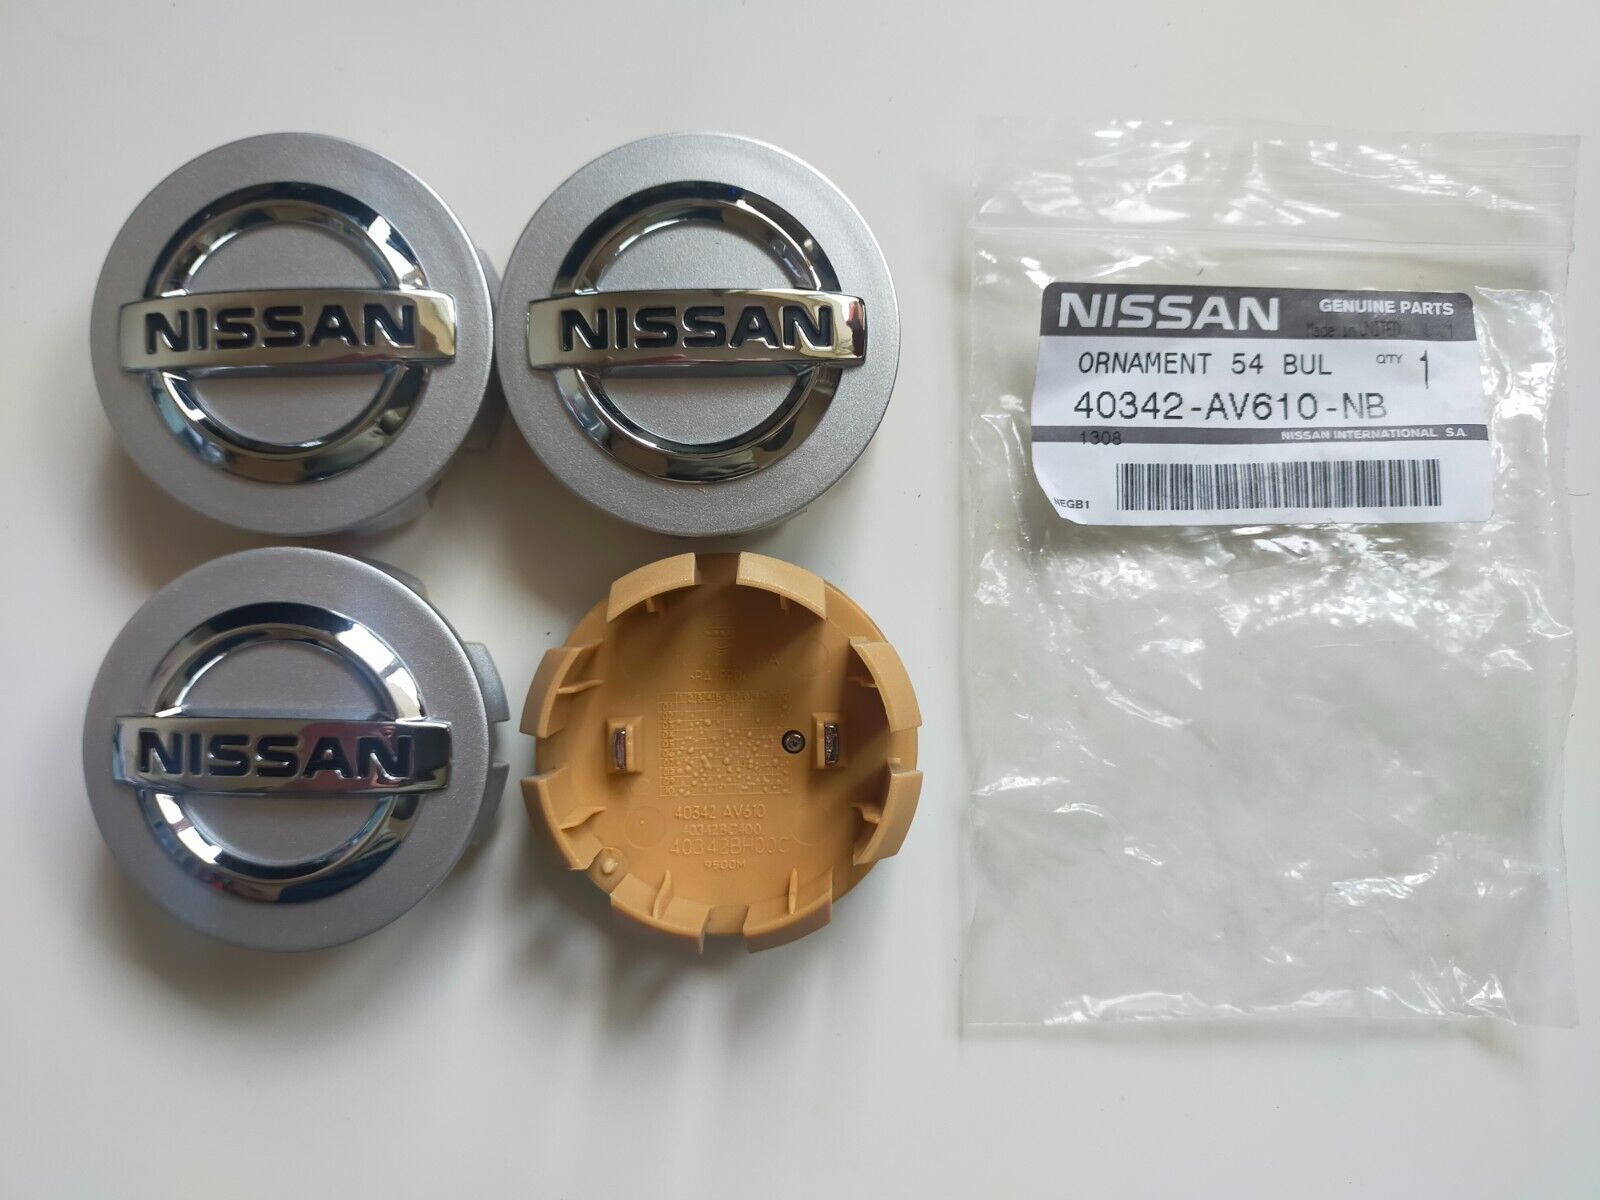 Nissan Micra Note Almera Alloy Wheel Centre Caps x 4pcs   pt no 40342-AV610-NB